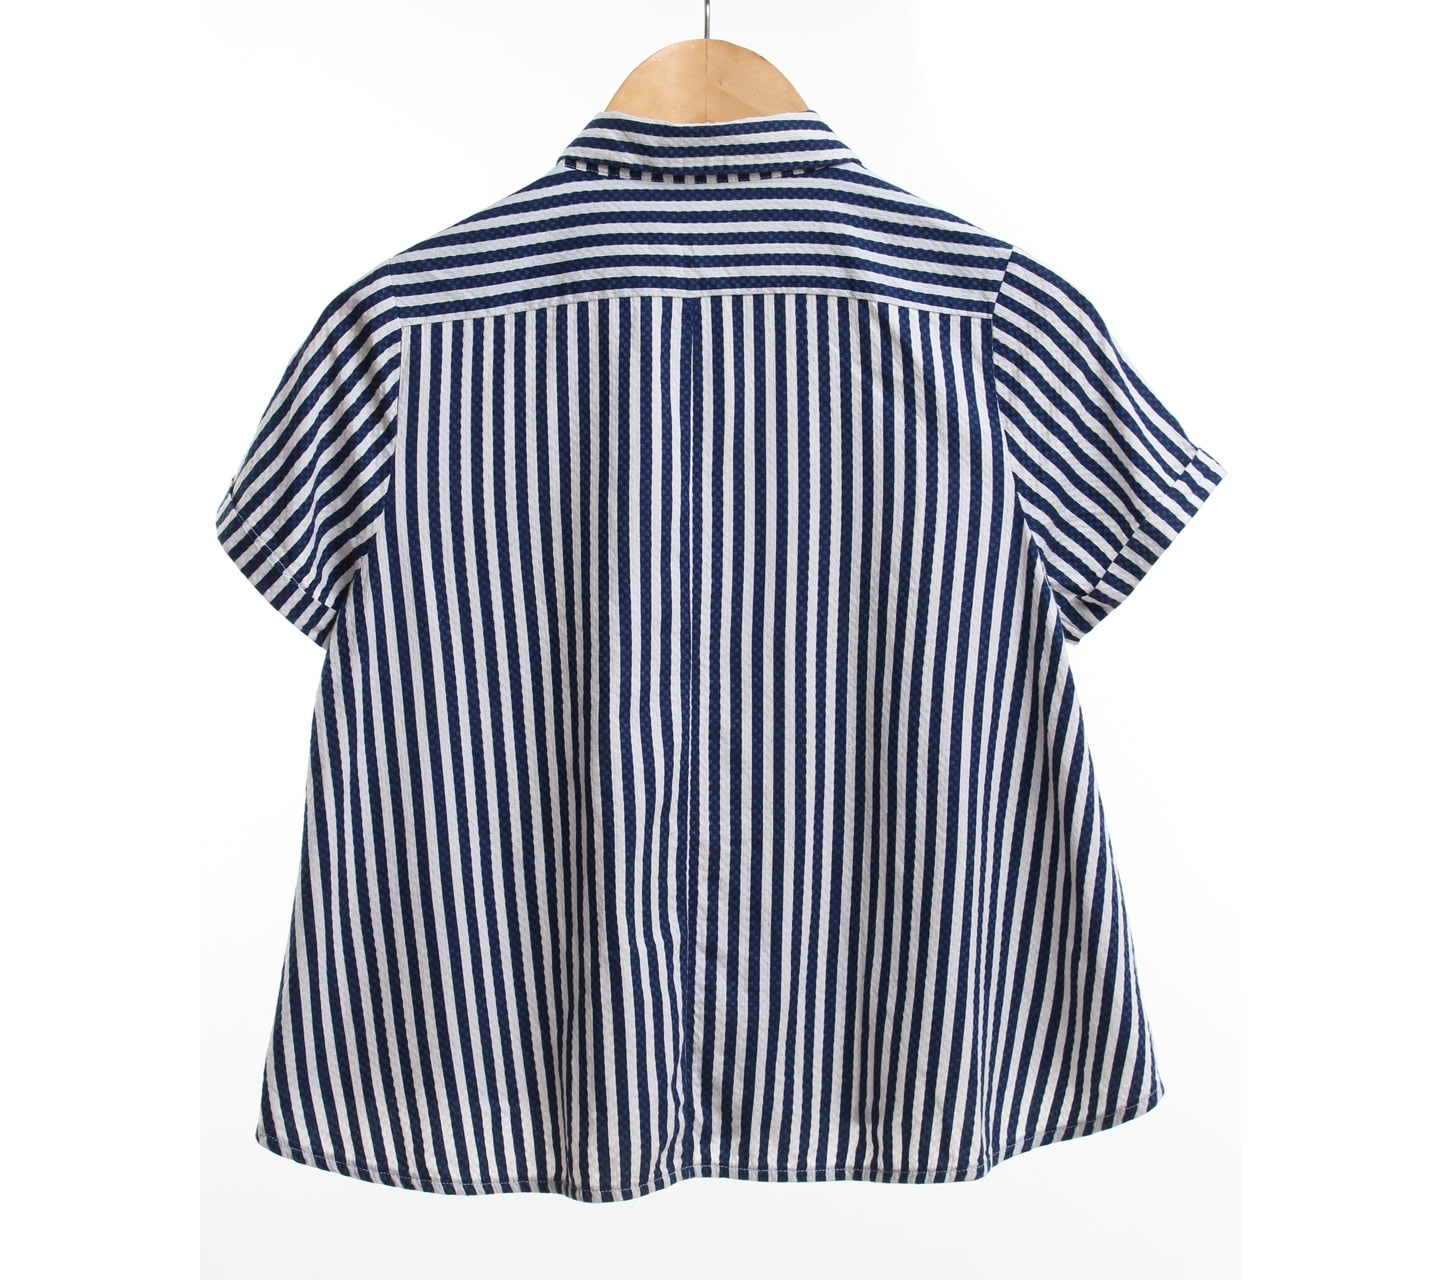 Odiva Blue And White Striped Shirt